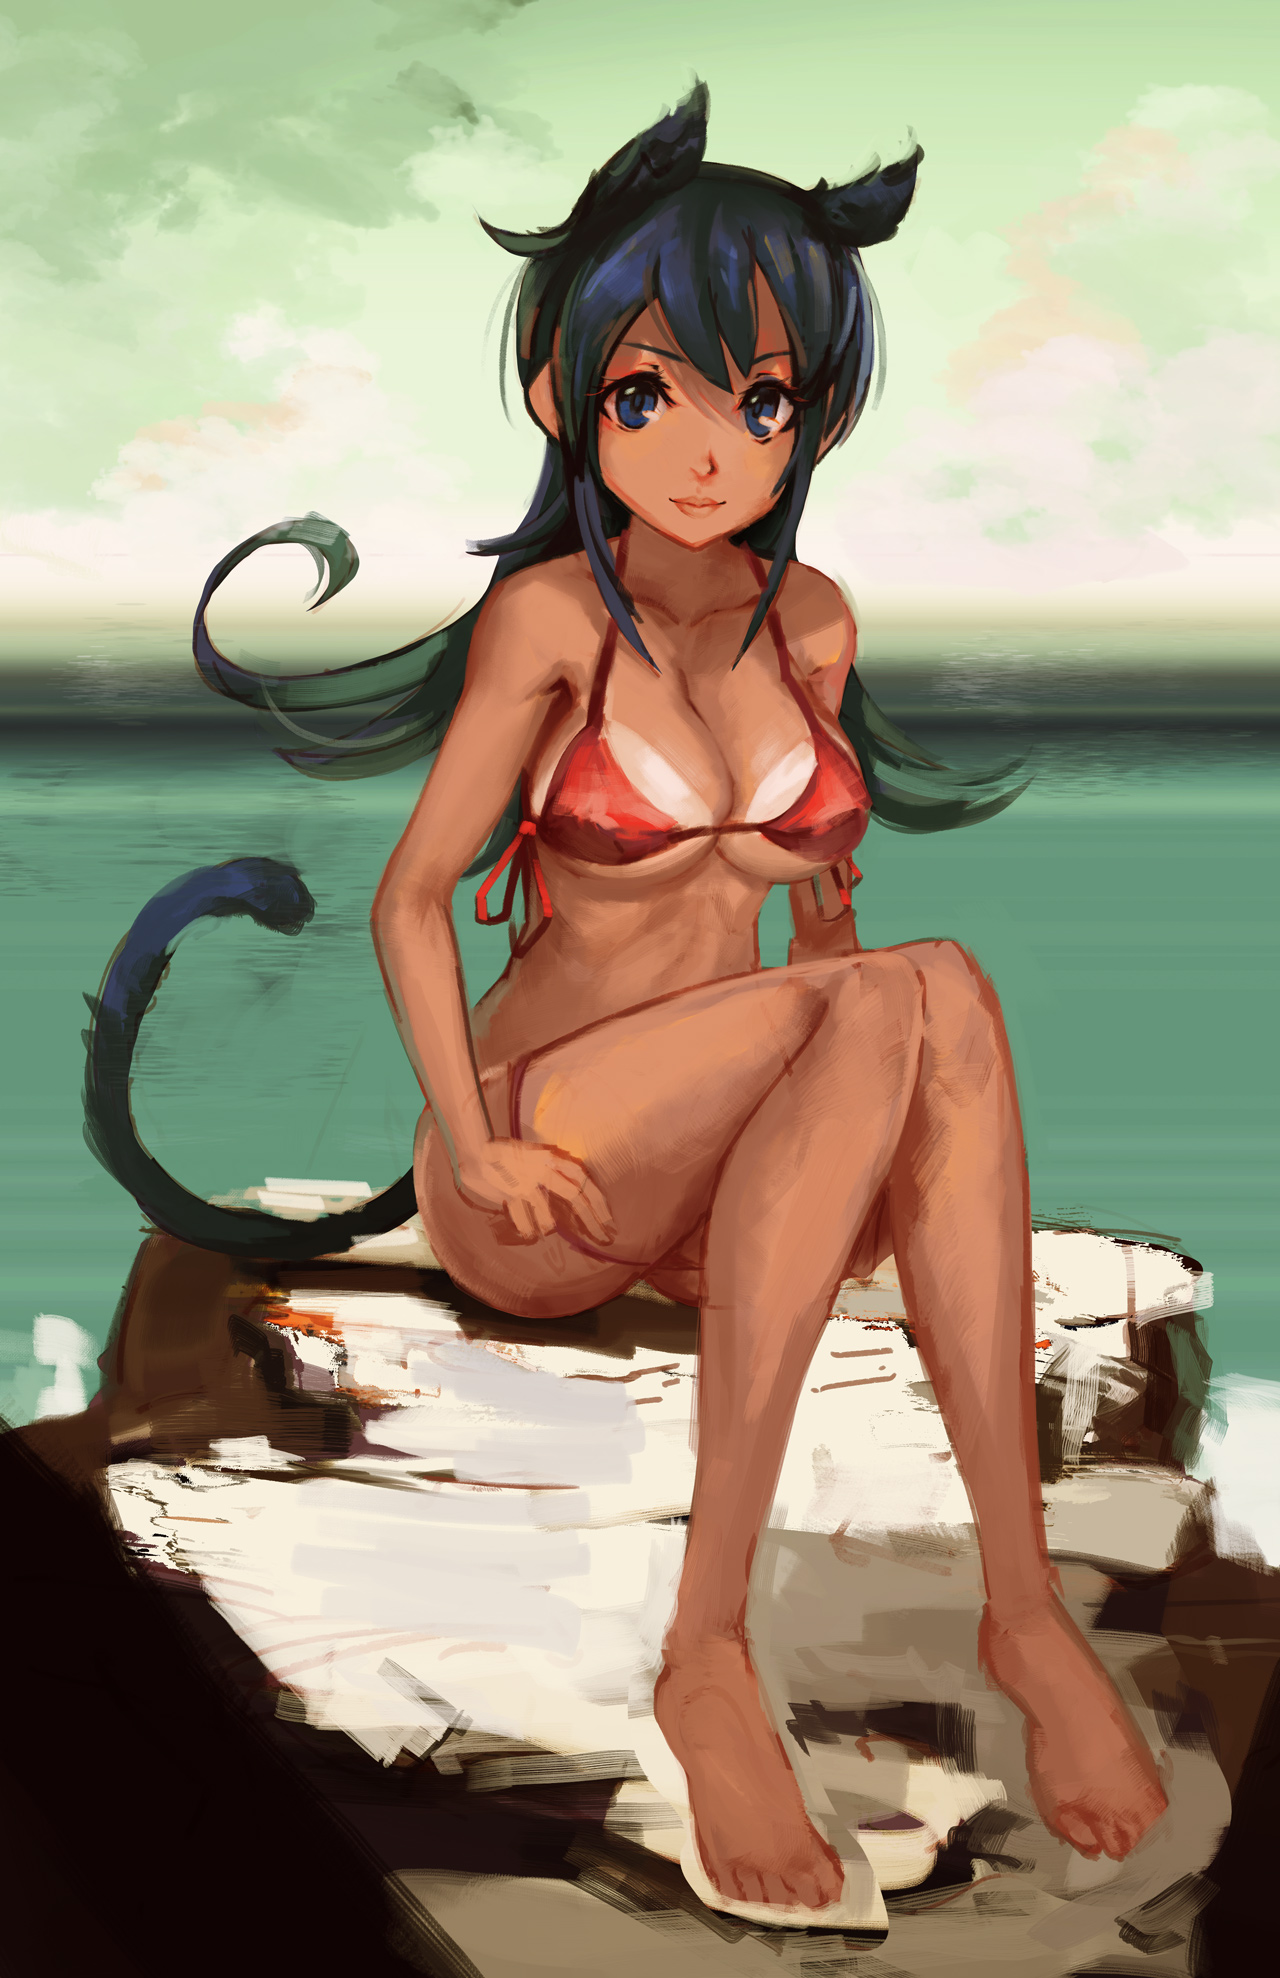 Anime 1280x1978 anime girls bikini cat girl tail tan lines thighs together sitting knees together undressing removing bikini panties